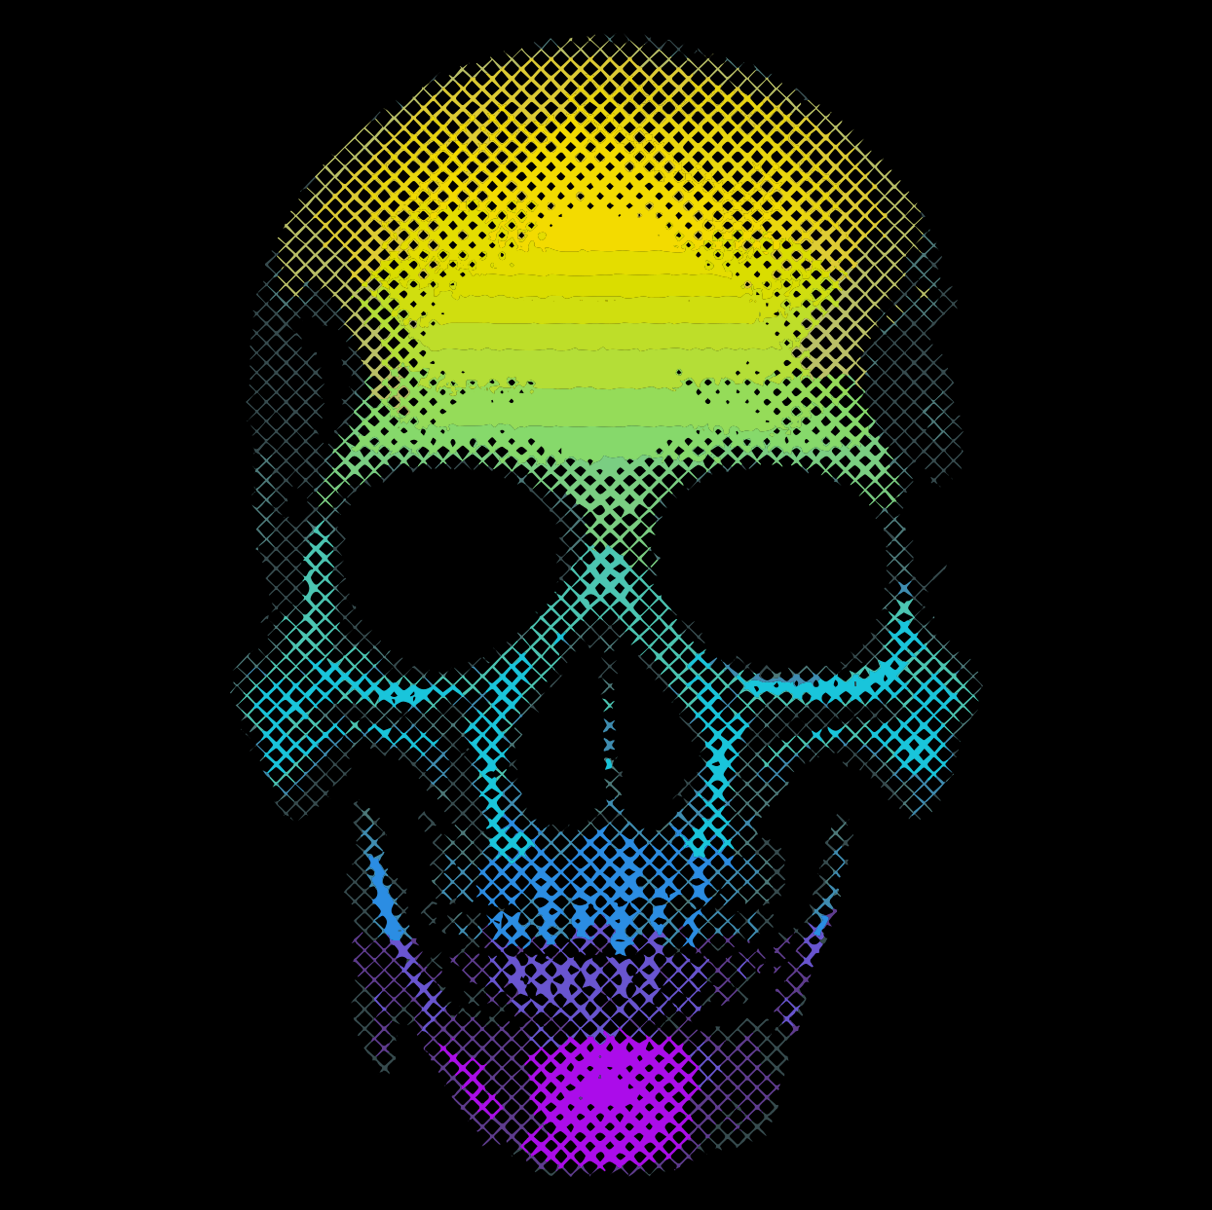 T-shirt Skull HD couleur